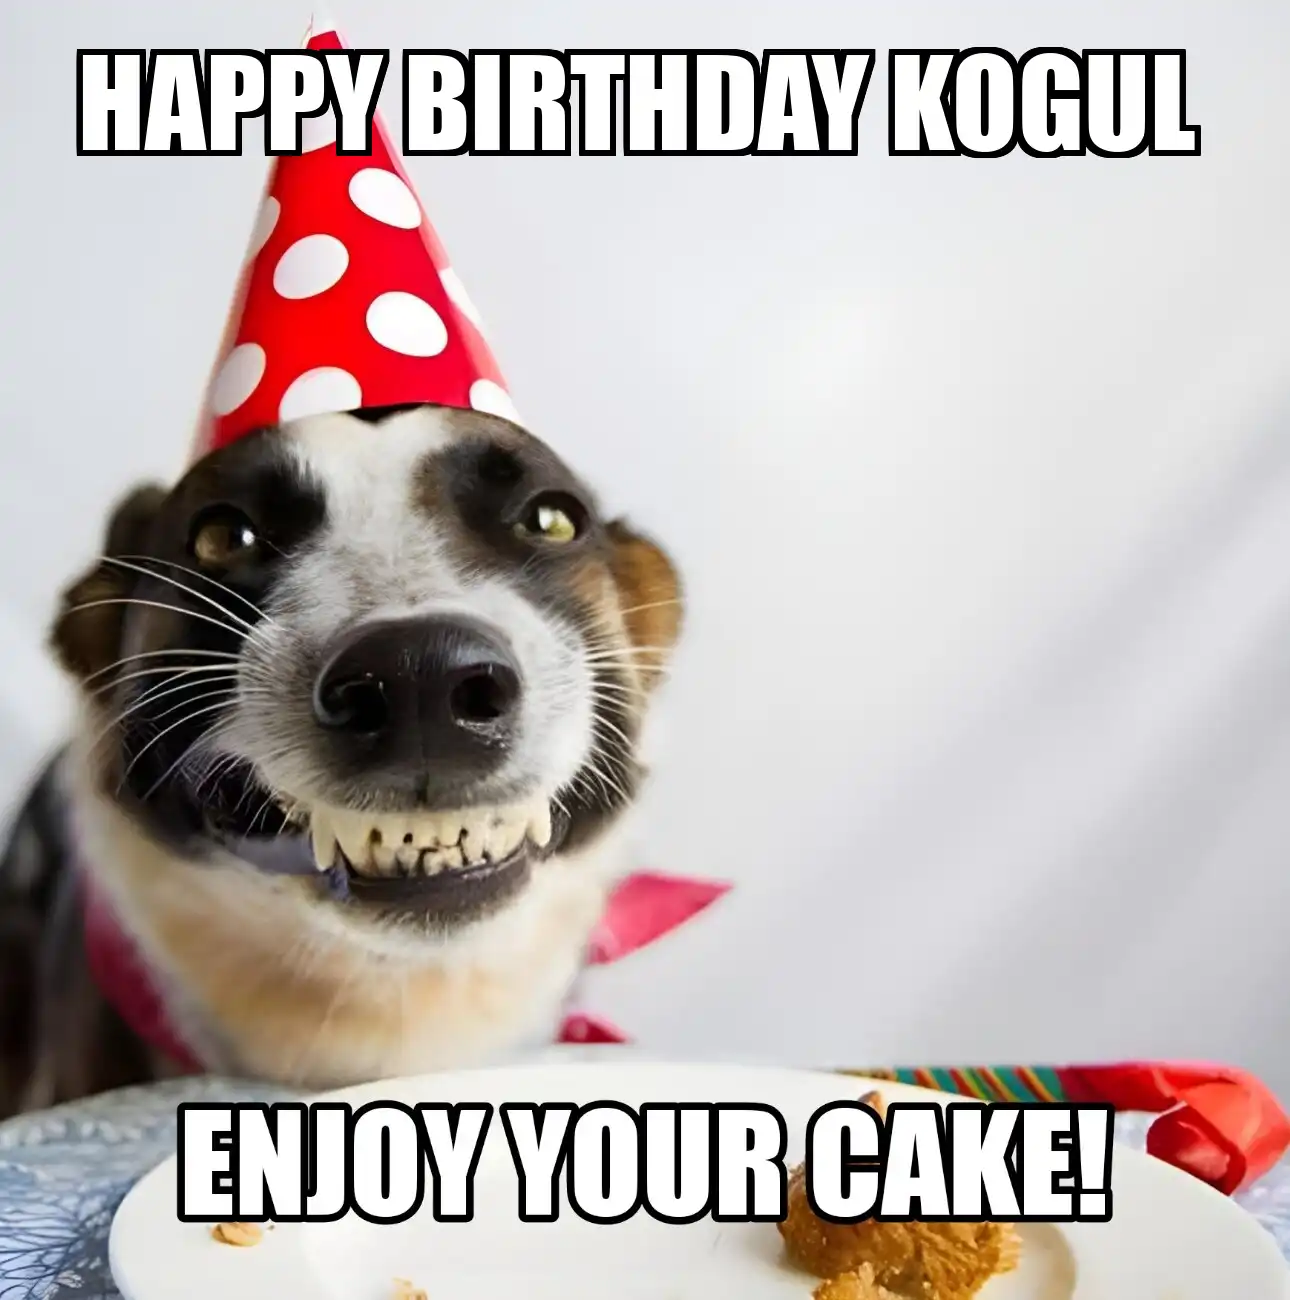 Happy Birthday Kogul Enjoy Your Cake Dog Meme